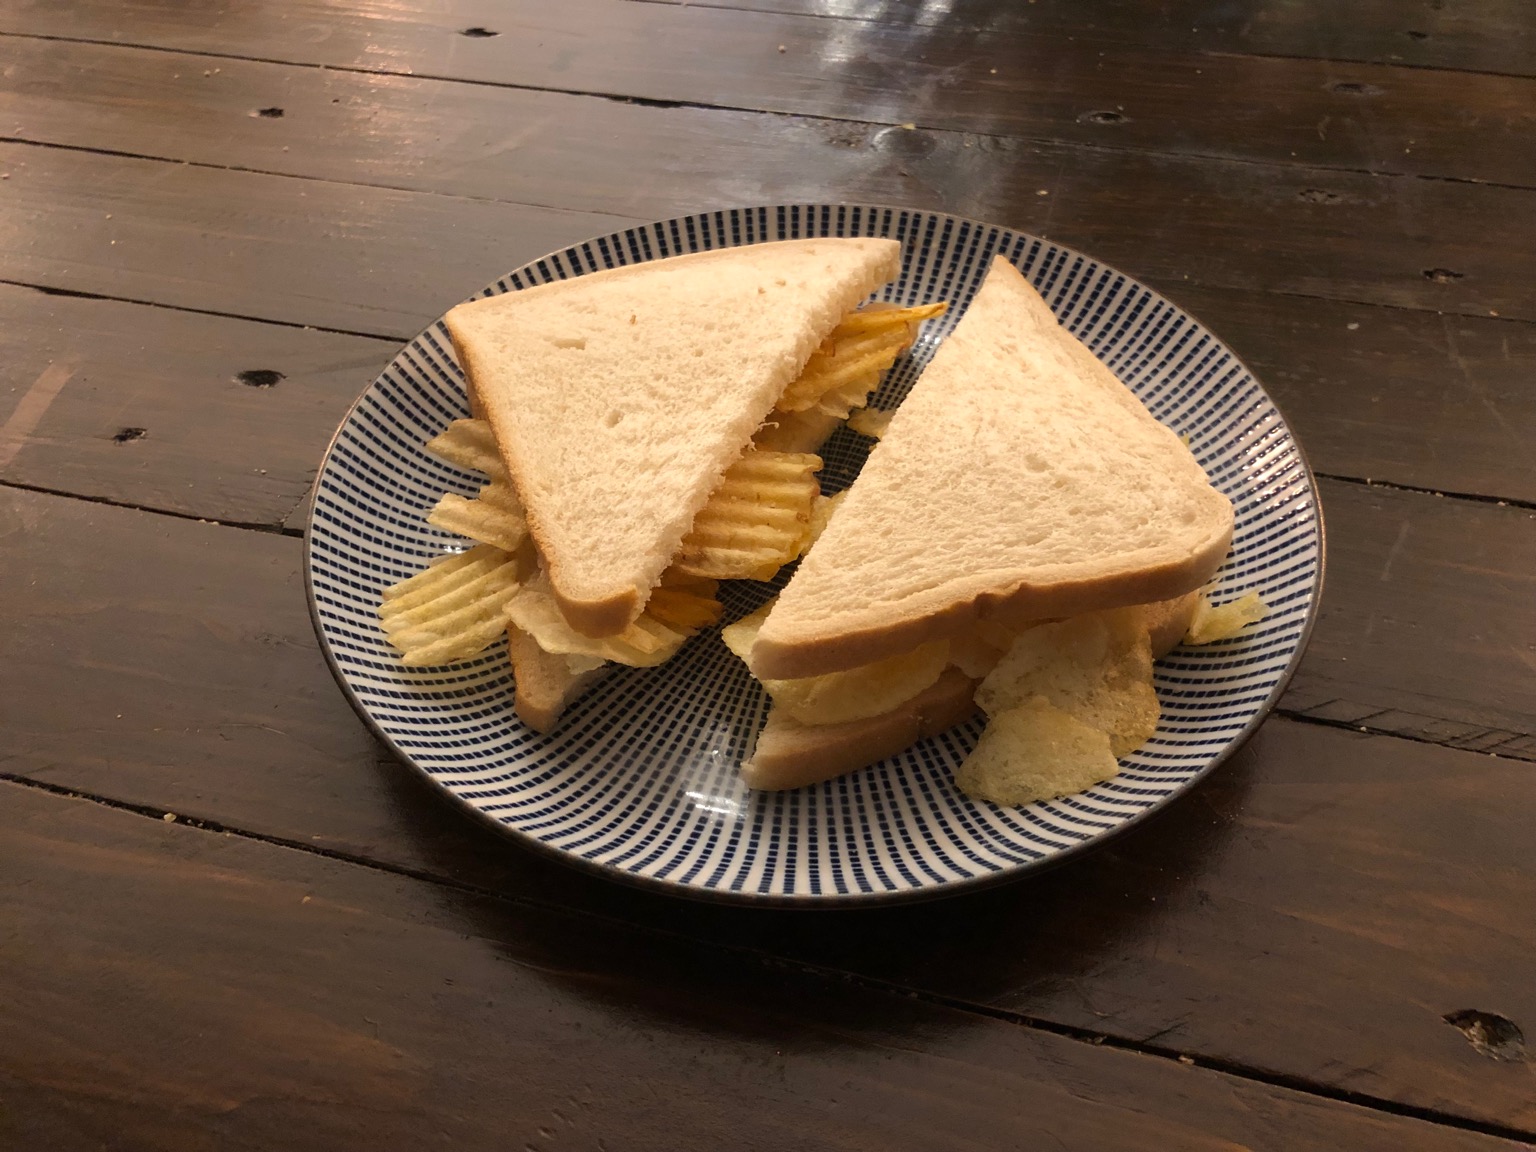 White crinkle-cut crisp sandwich cut diagonally